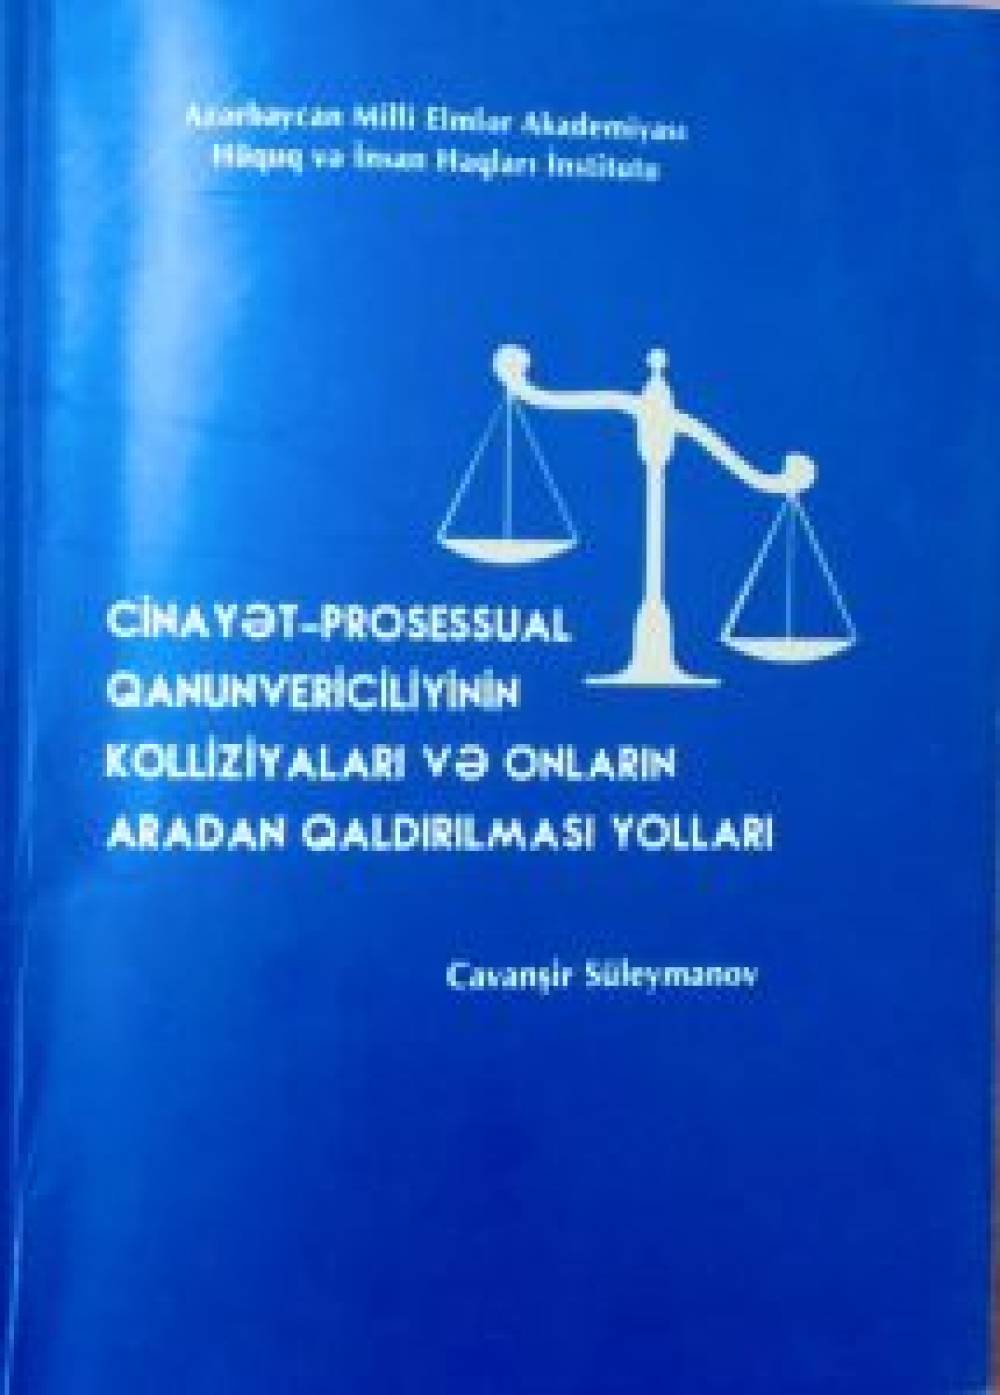 Suleymanov C.I: “Collisions of the criminal procedure legislation and ways to overcome it”